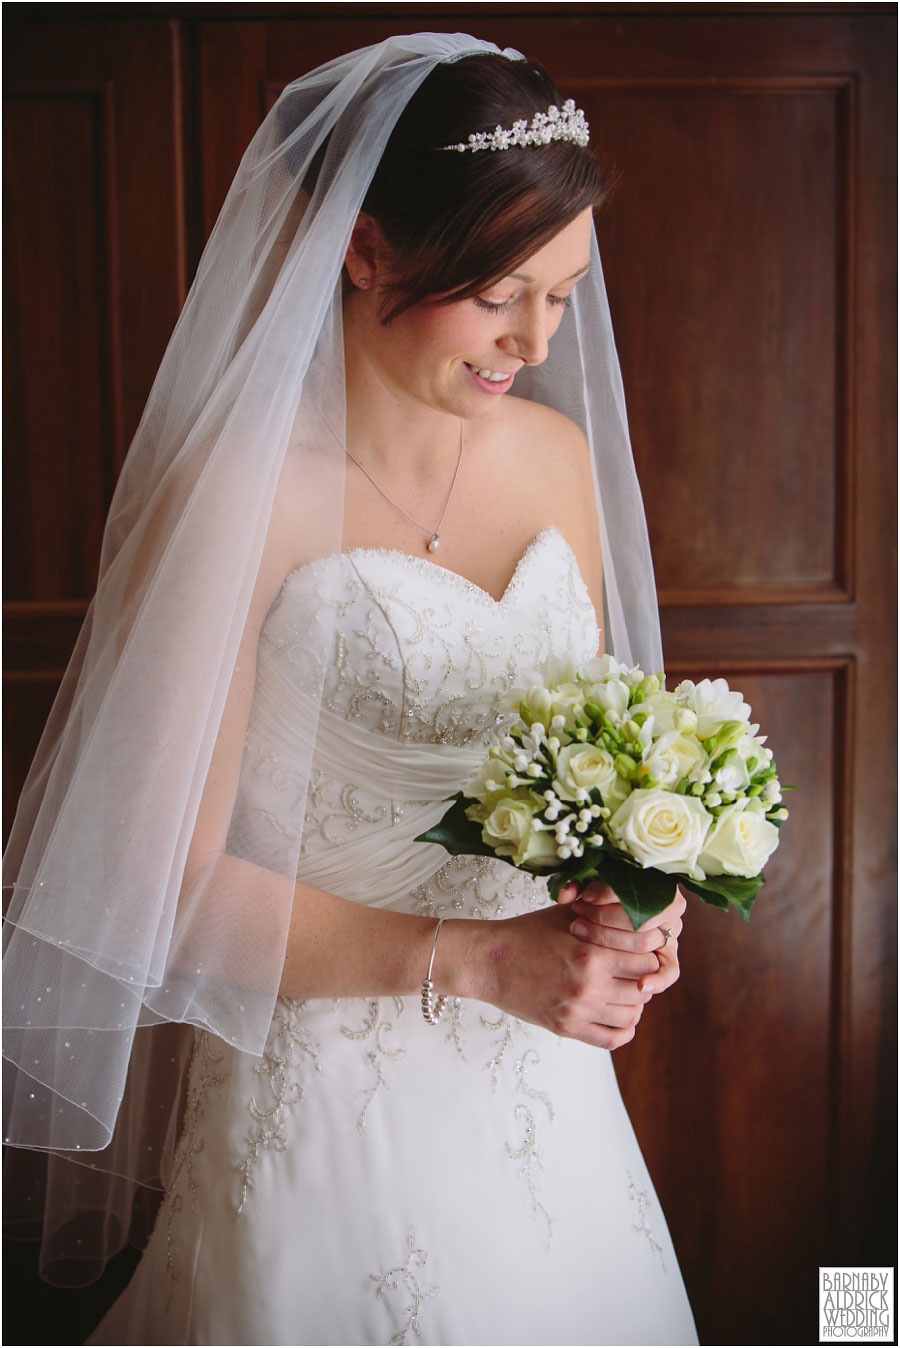 Meols Hall Churchtown Wedding Photography by Barnaby Aldrick Wedding Photographer 026.jpg